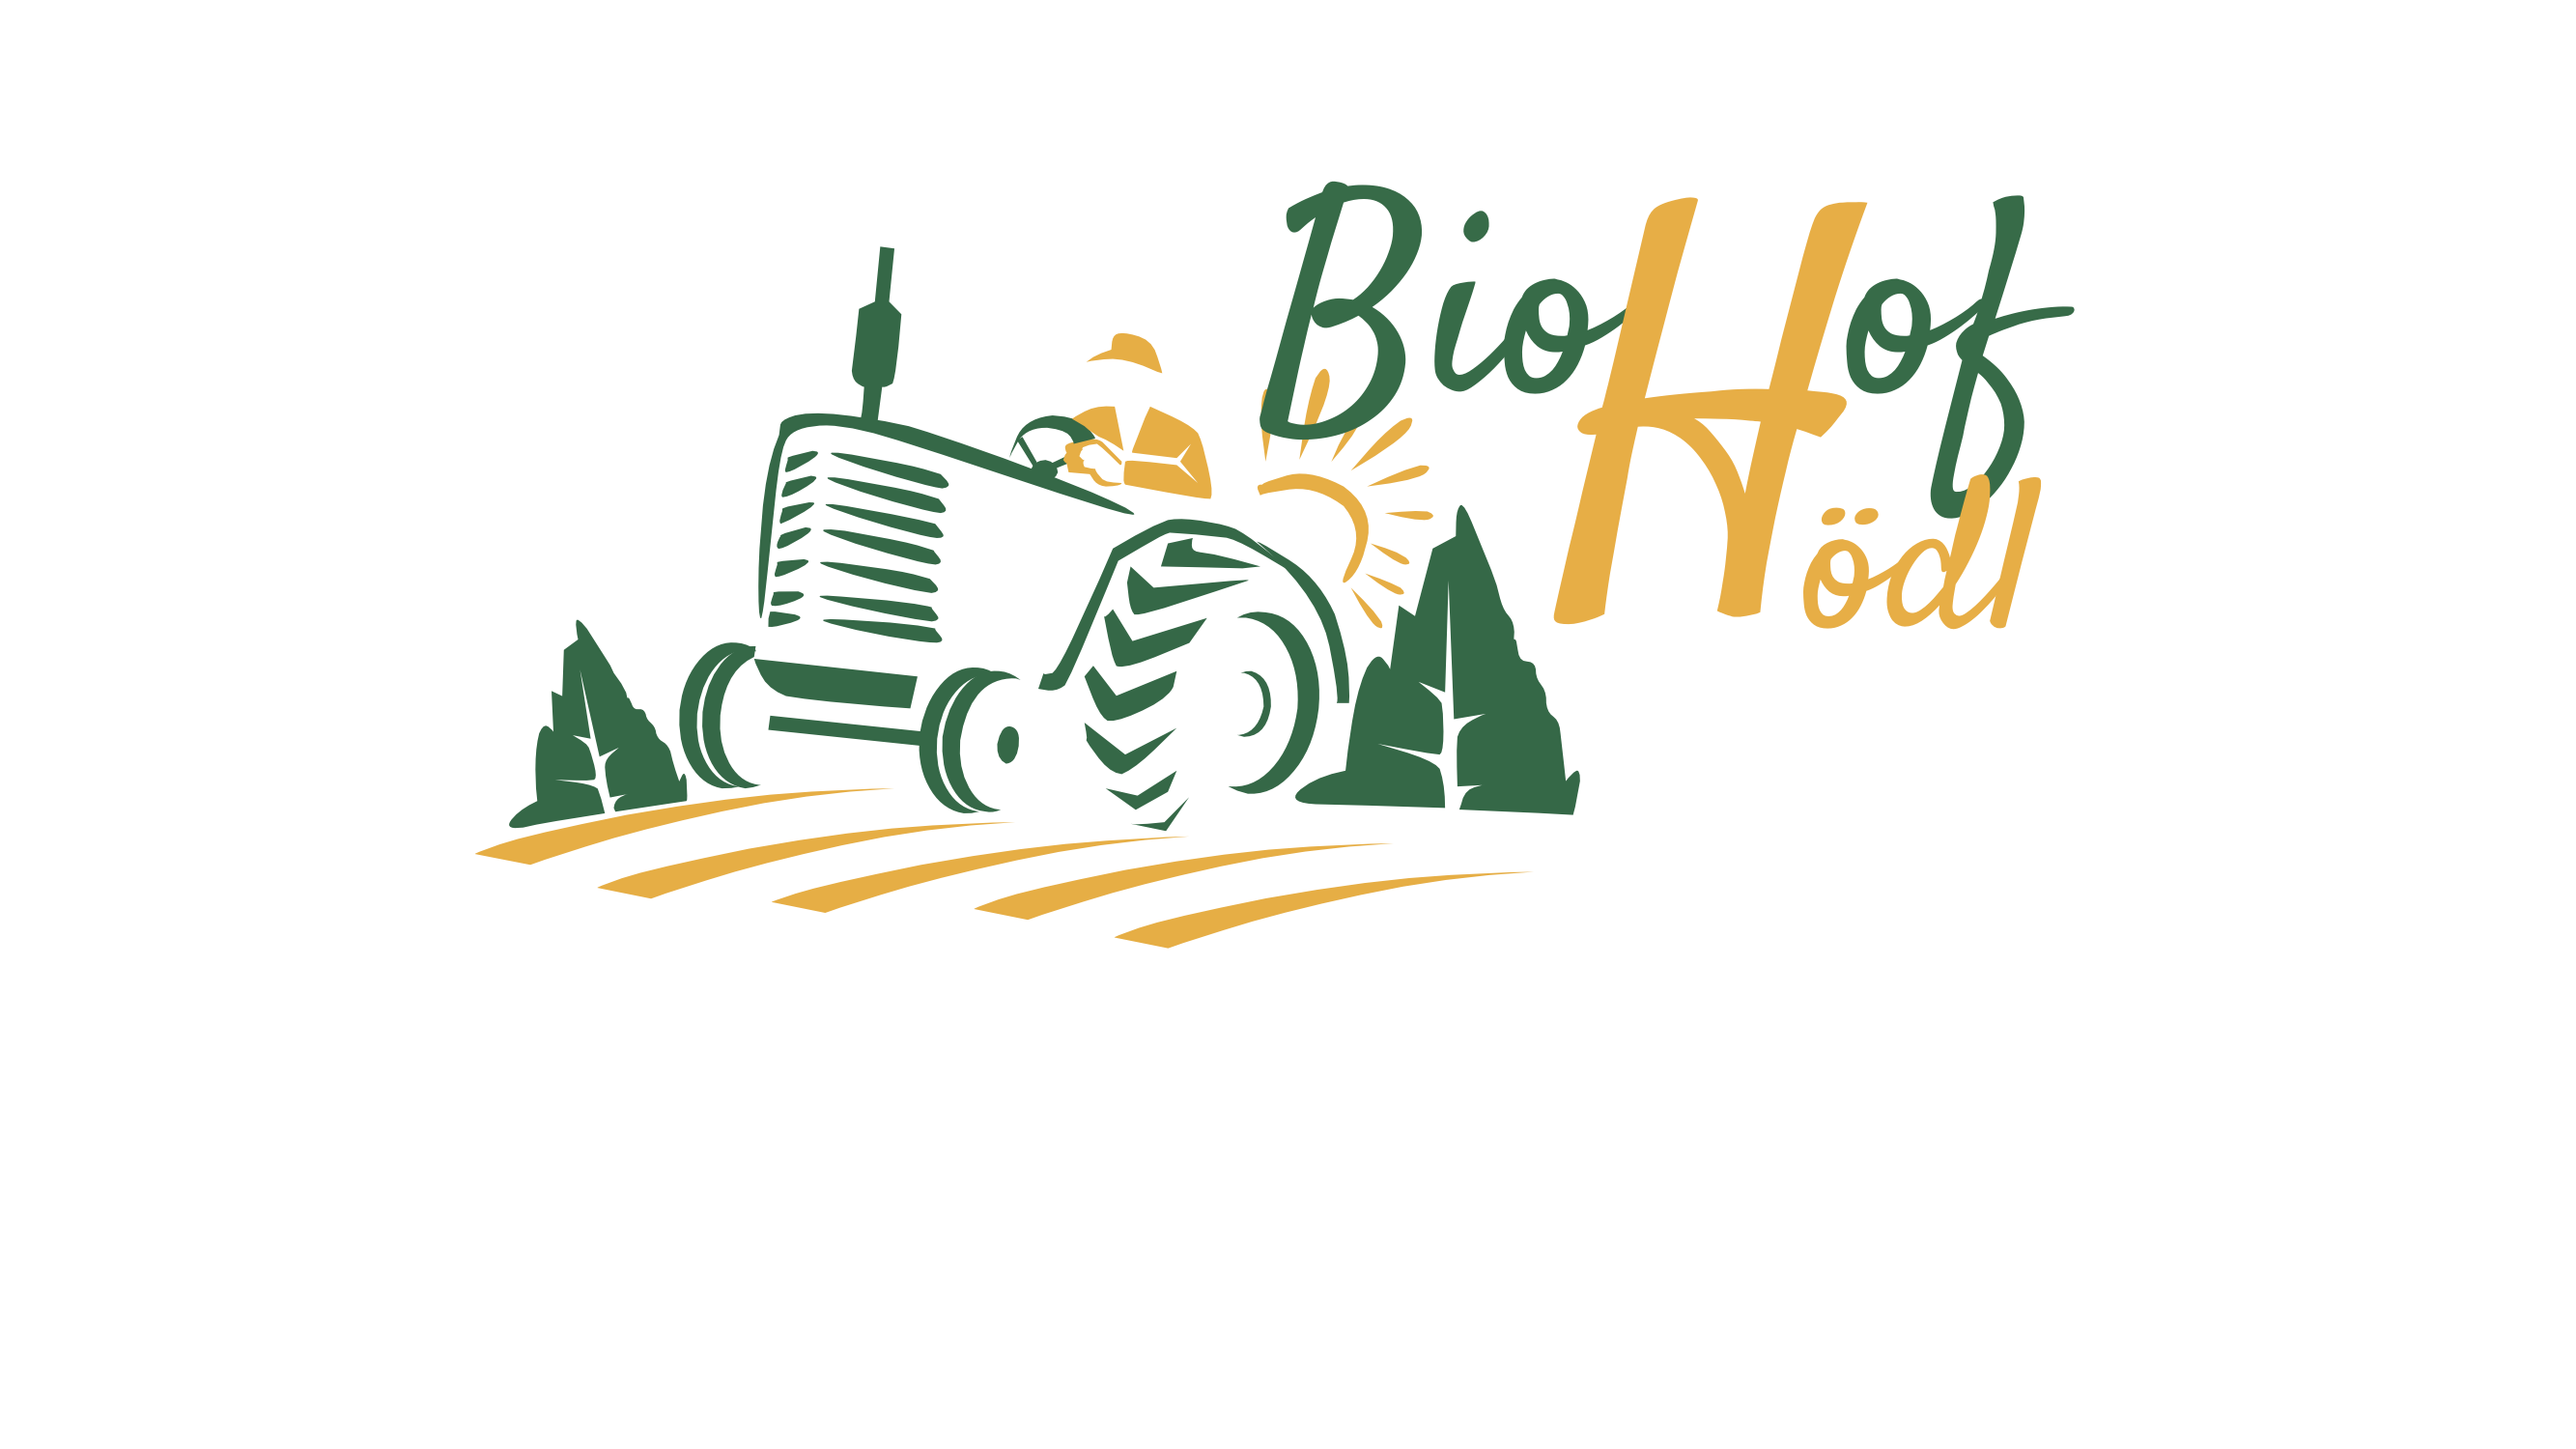 Biohof Hödl